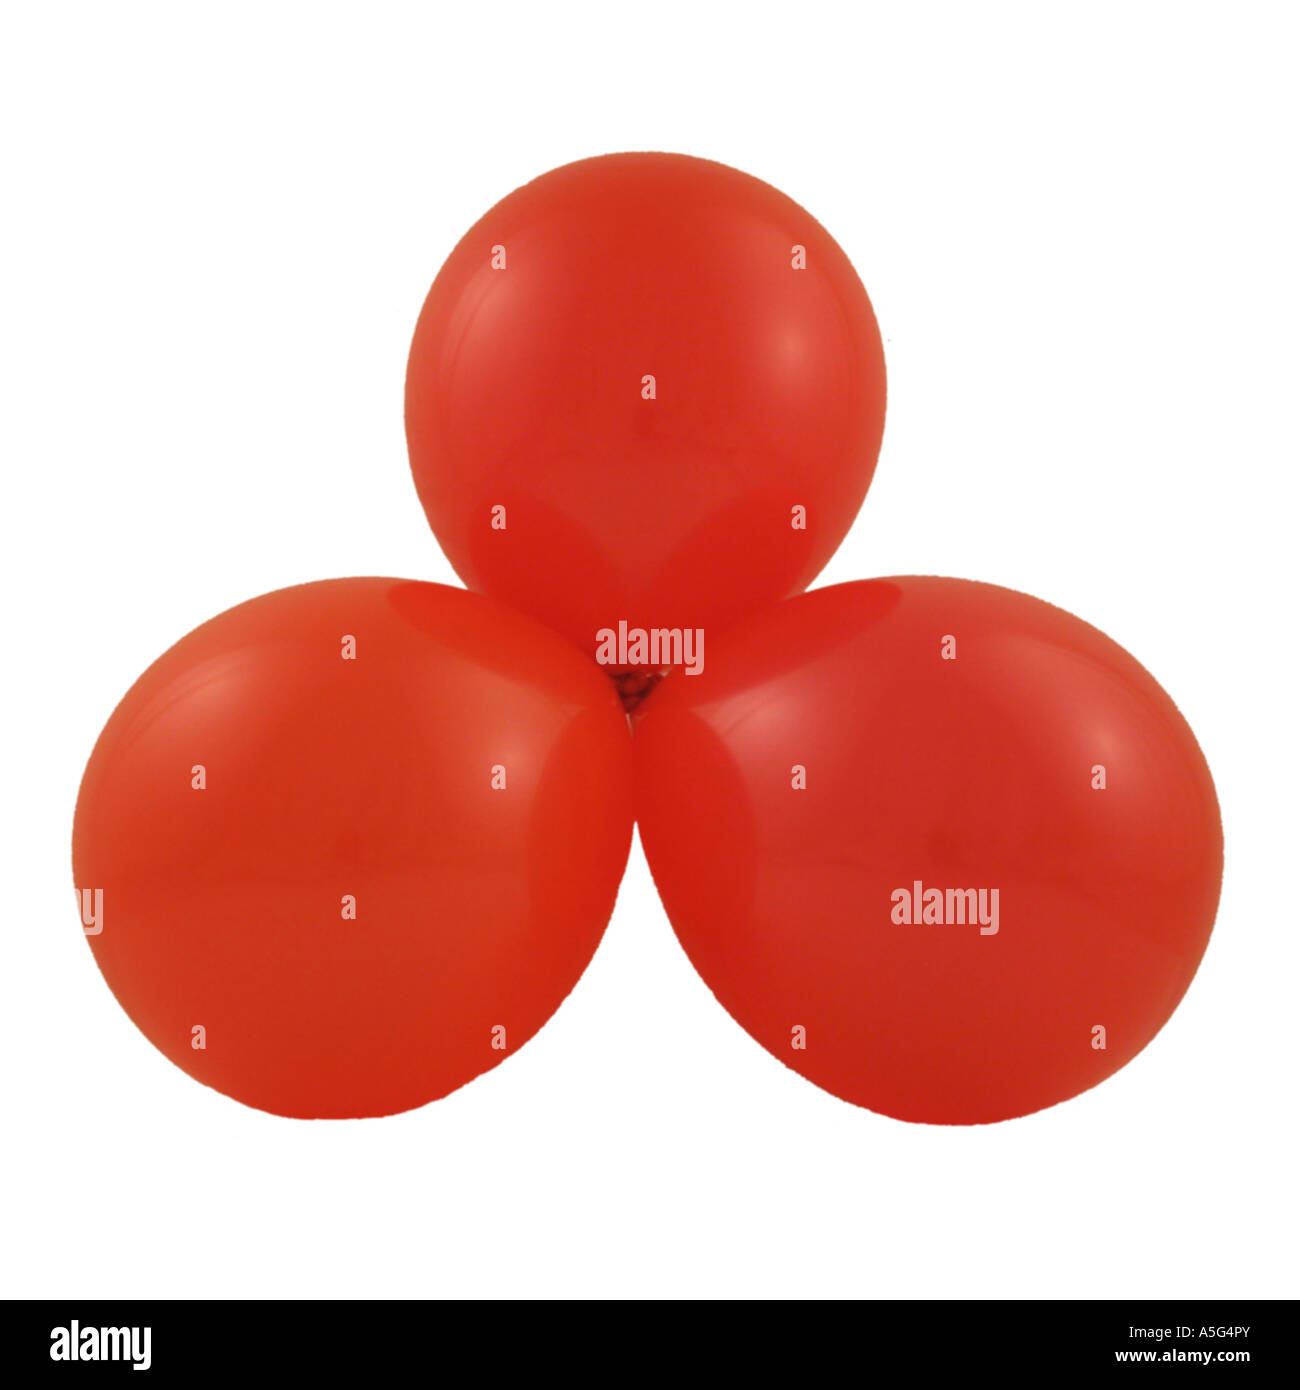 drei Ballons gebunden zusammen repräsentieren trigonal planaren geformtes Molekül Stockfoto